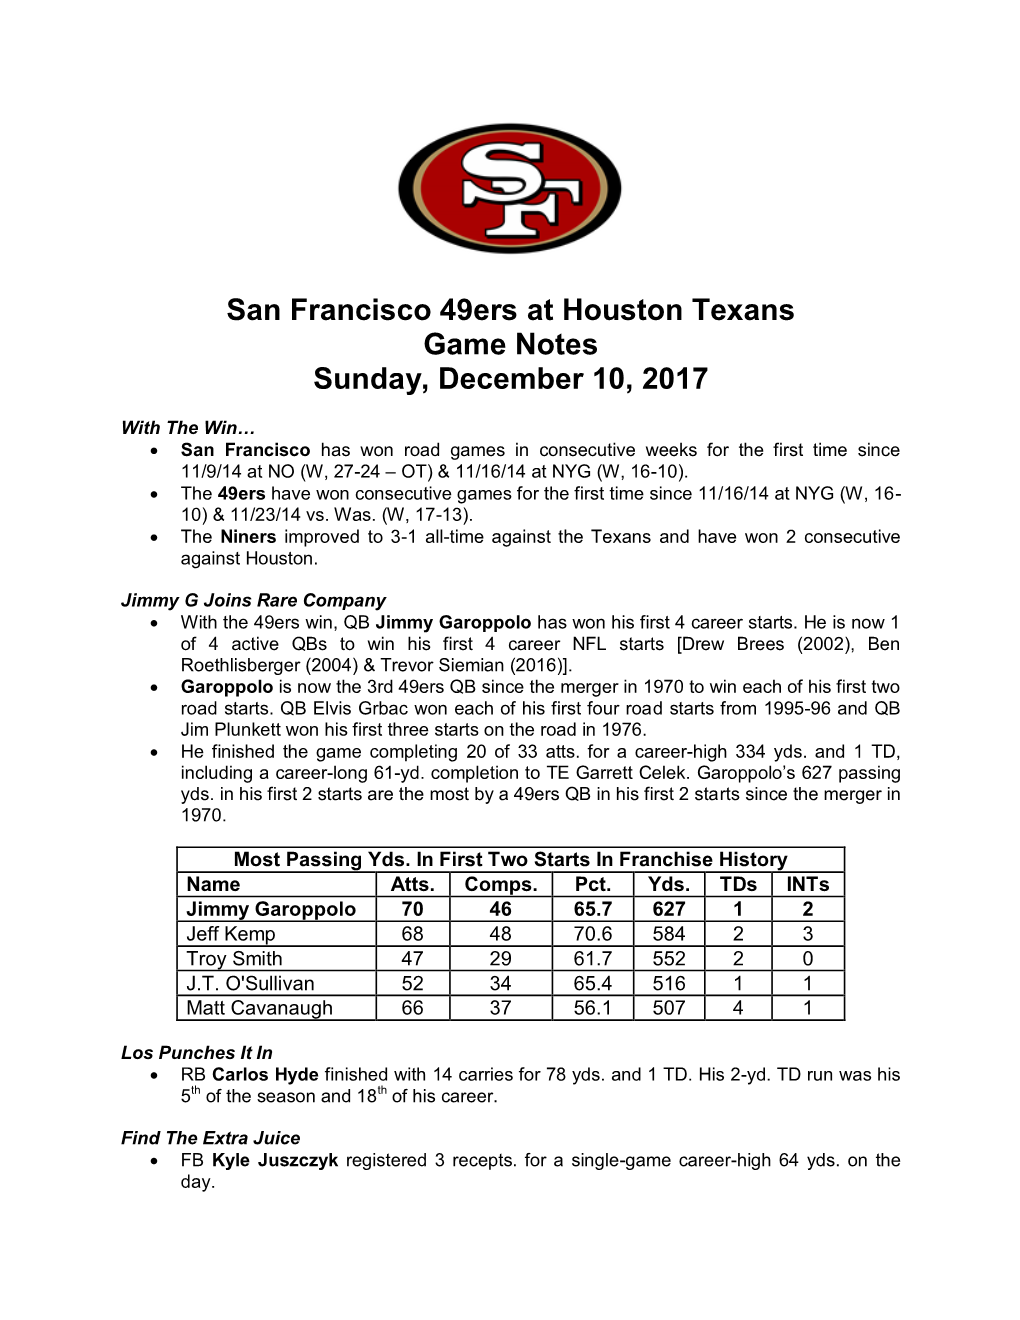 San Francisco 49Ers at Houston Texans Game Notes Sunday, December 10, 2017